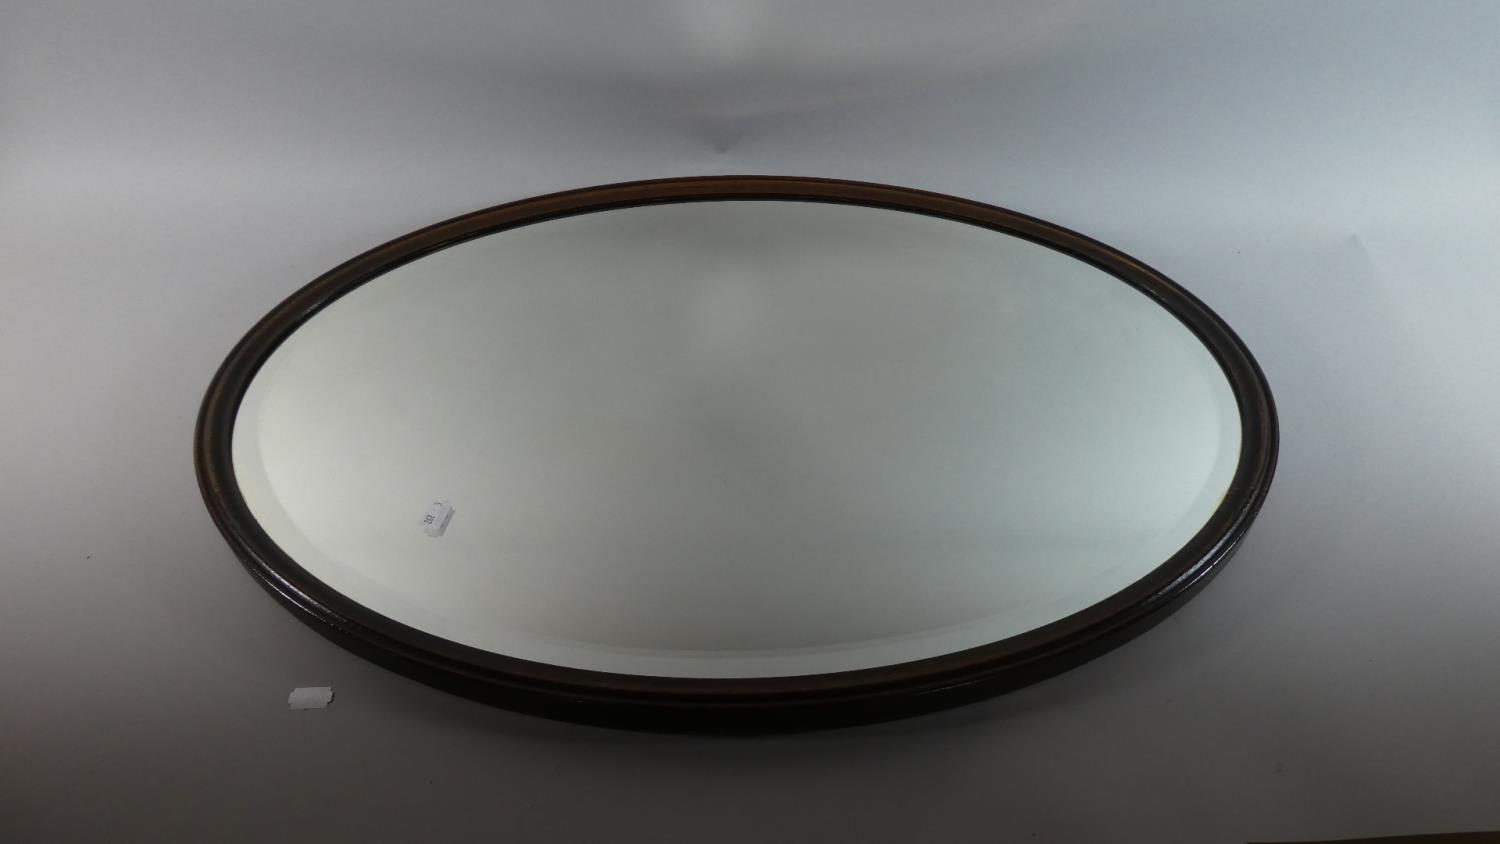 An Edwardian Oval Oak Framed Wall Mirror with Bevelled Glass, 75cm Wide